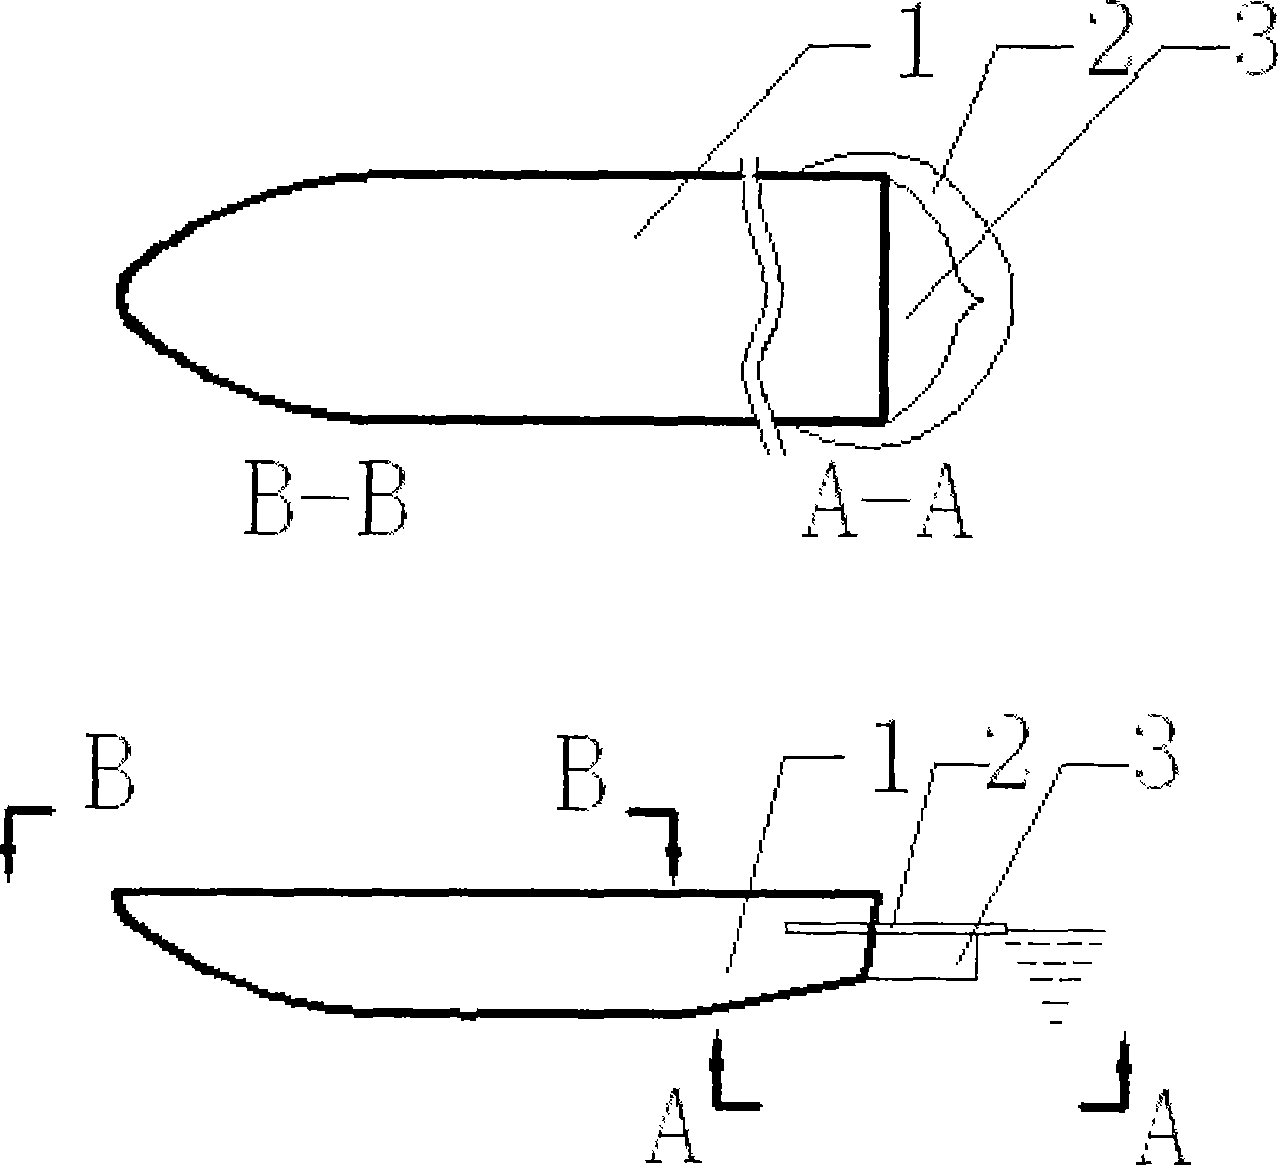 Ship drag-reduction method using atmospheric pressure